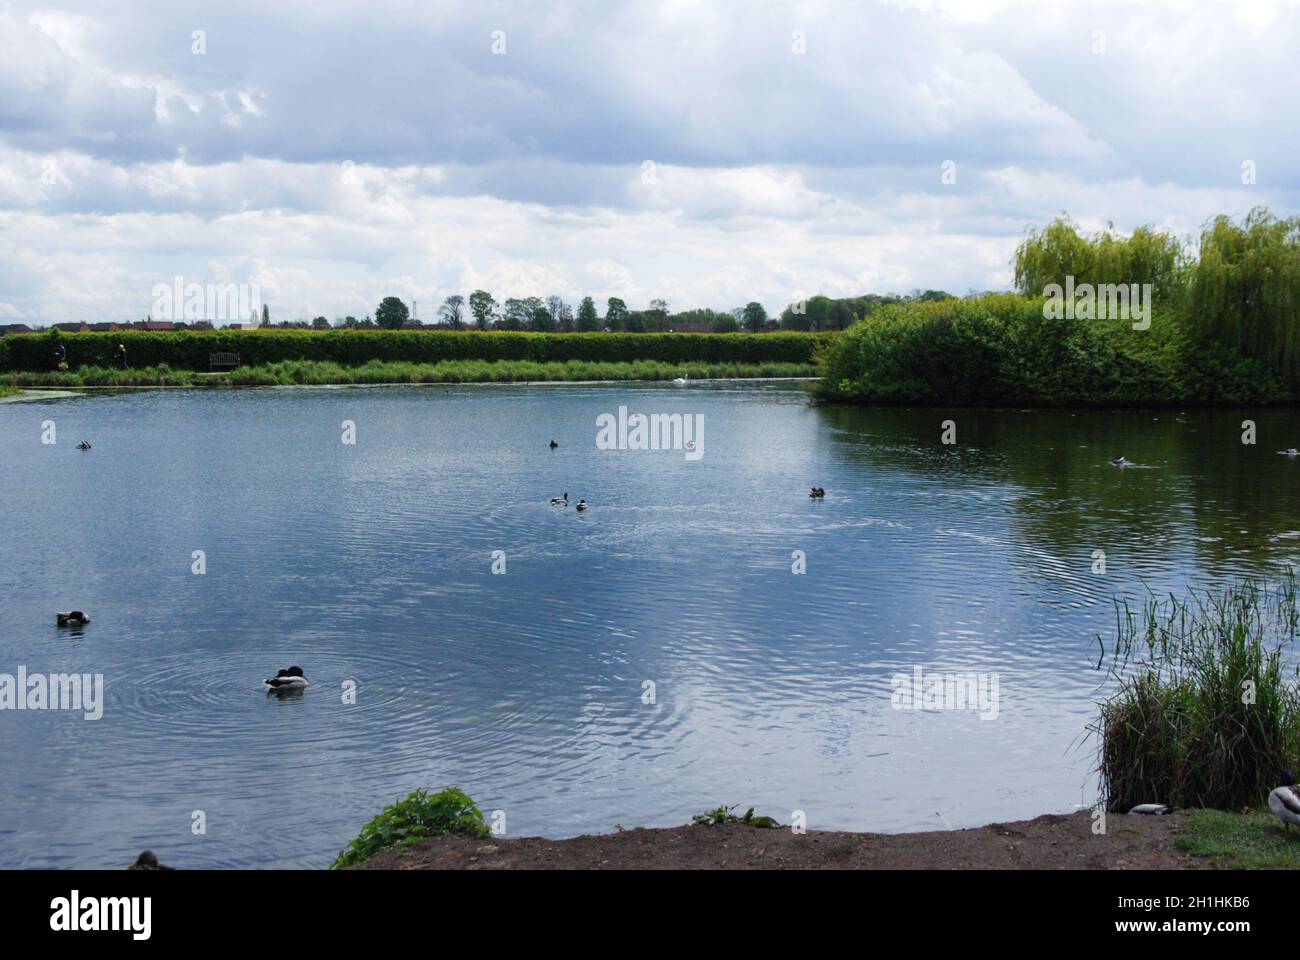 Pond, Ducks on Water Stock Photo